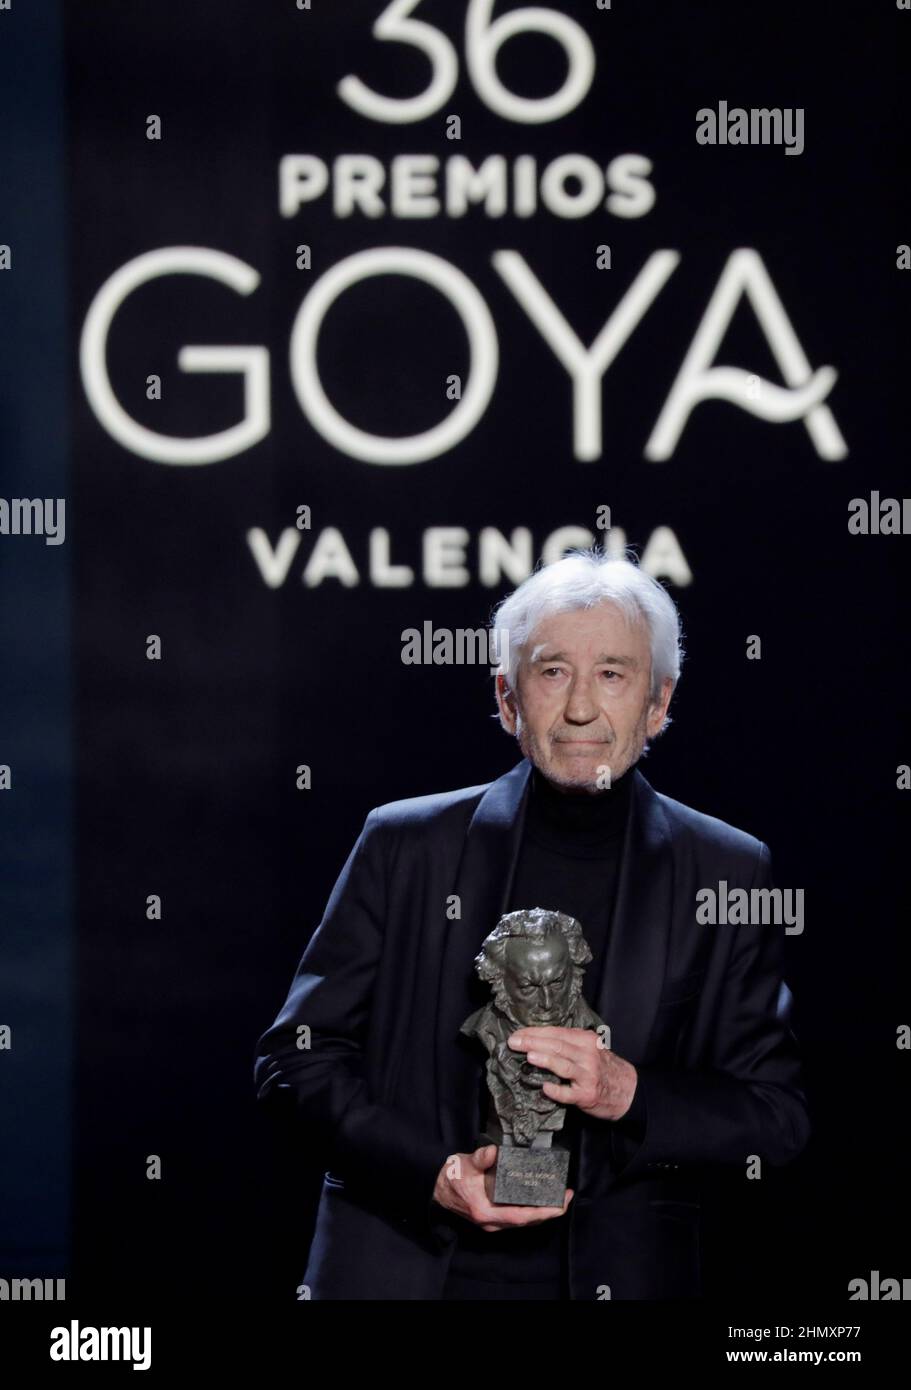 Actor Jose Sacristan receives the Honorary Goya at the 36th Spanish Film  Academy's Goya Awards ceremony in Valencia, Spain, February 13, 2022.  REUTERS/Eva Manez Stock Photo - Alamy